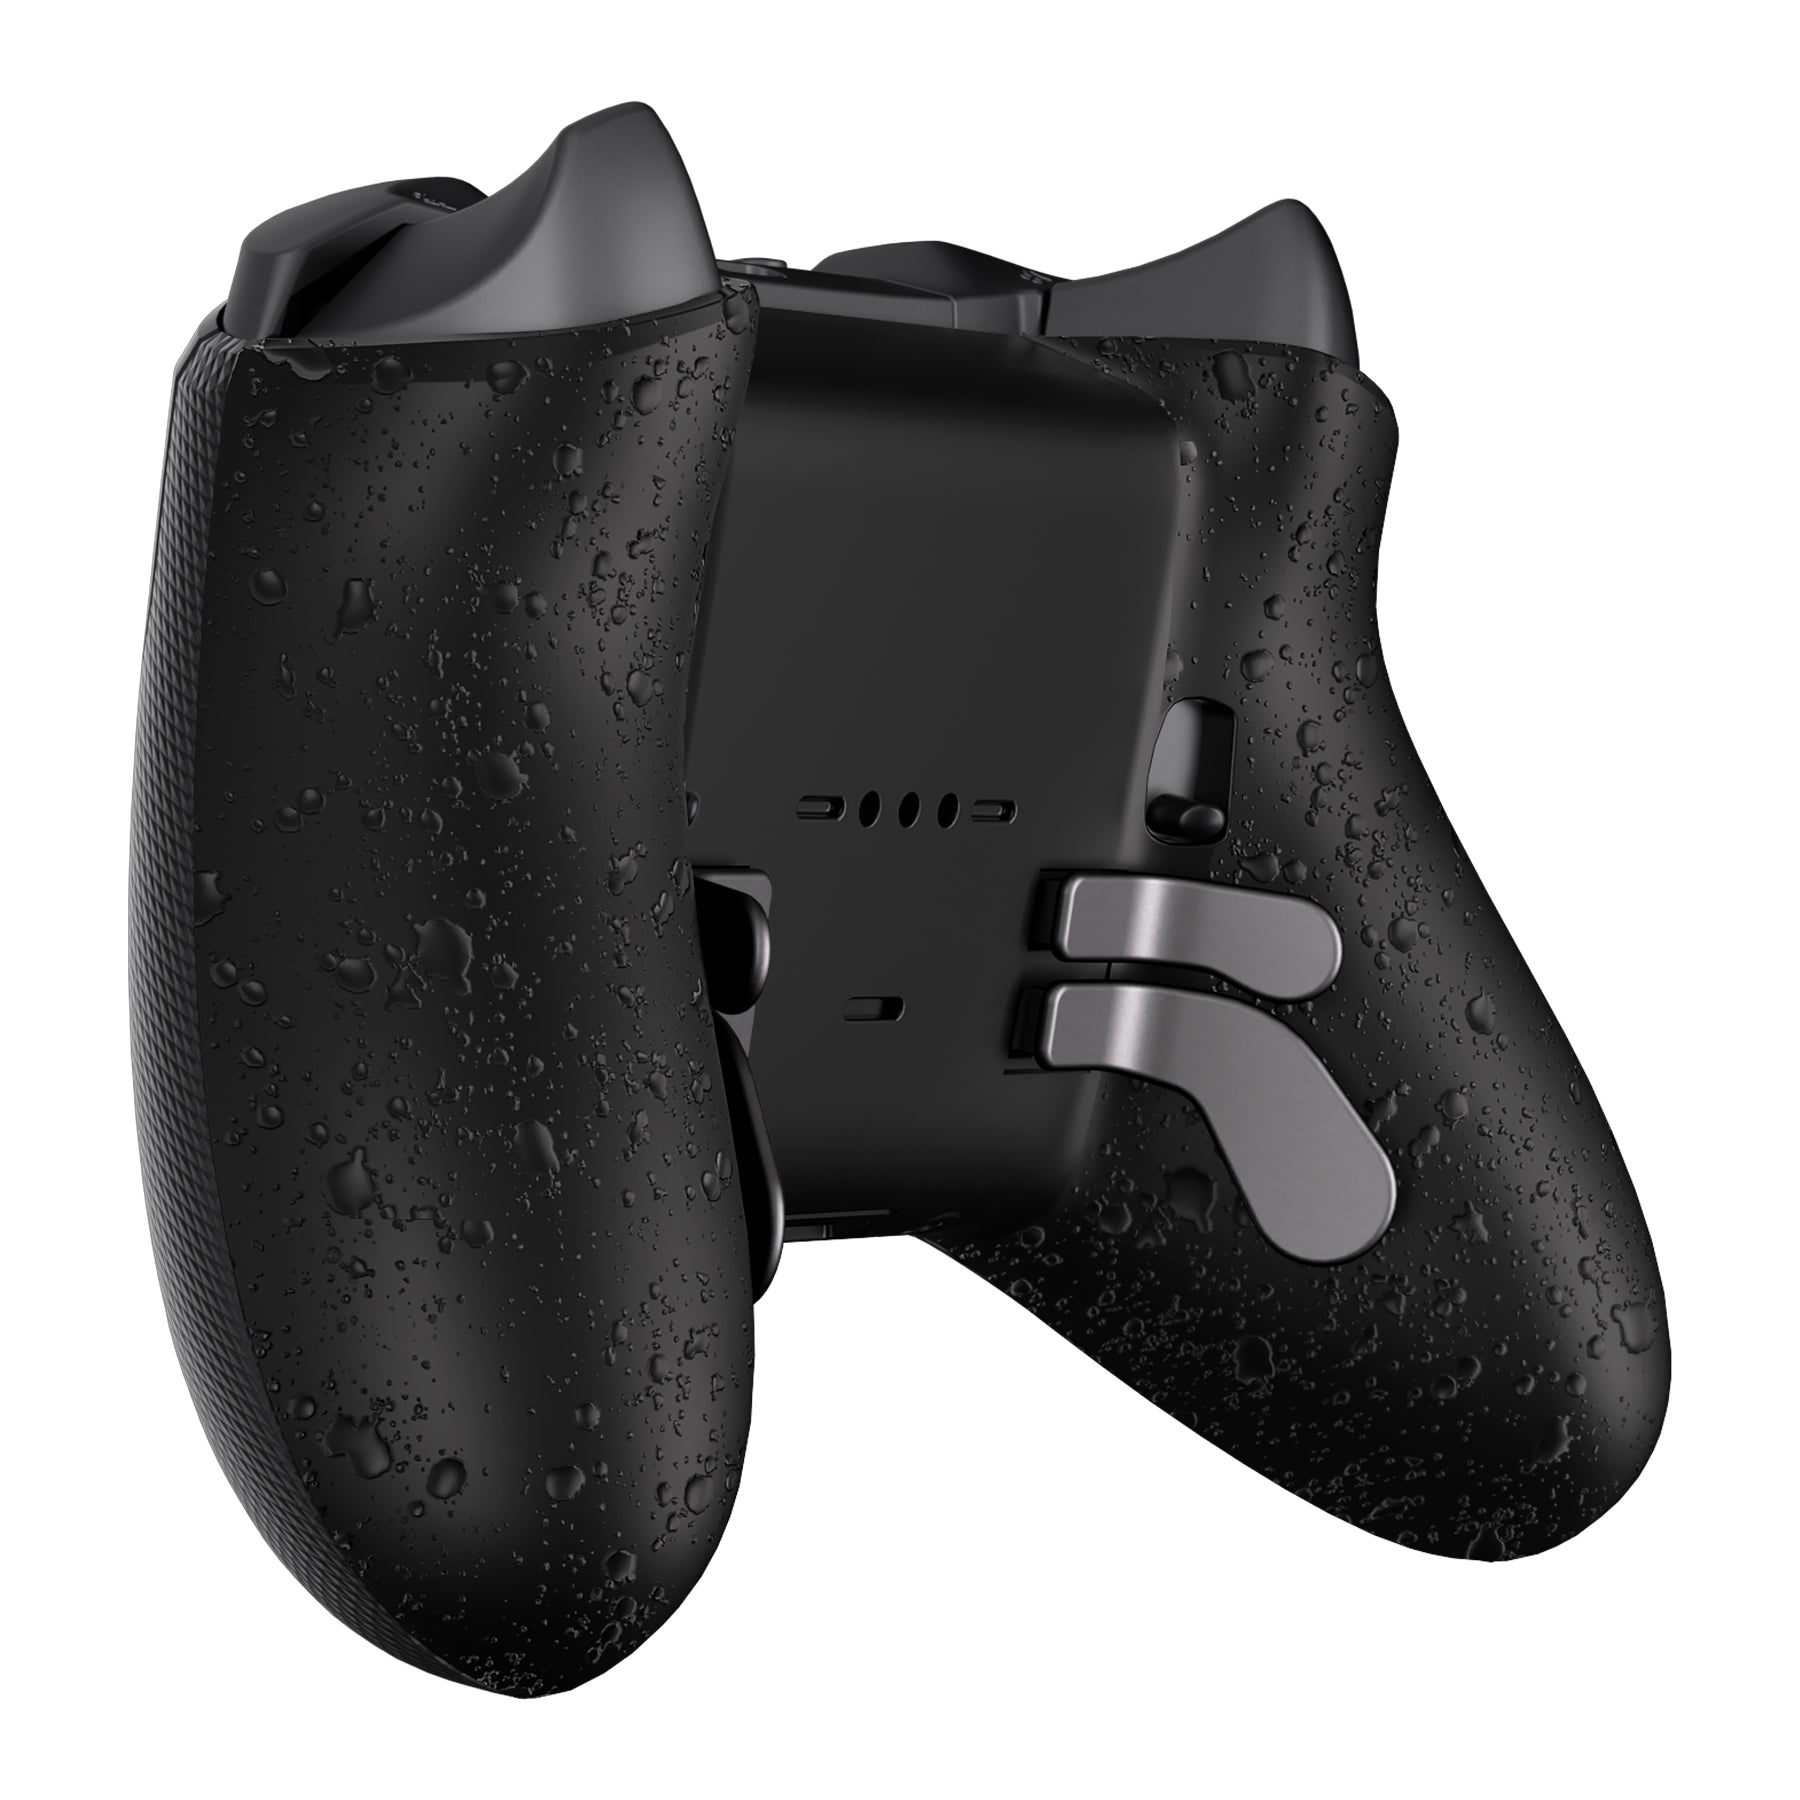 Xbox Elite Series 2 Core Wireless Controller - White/Black